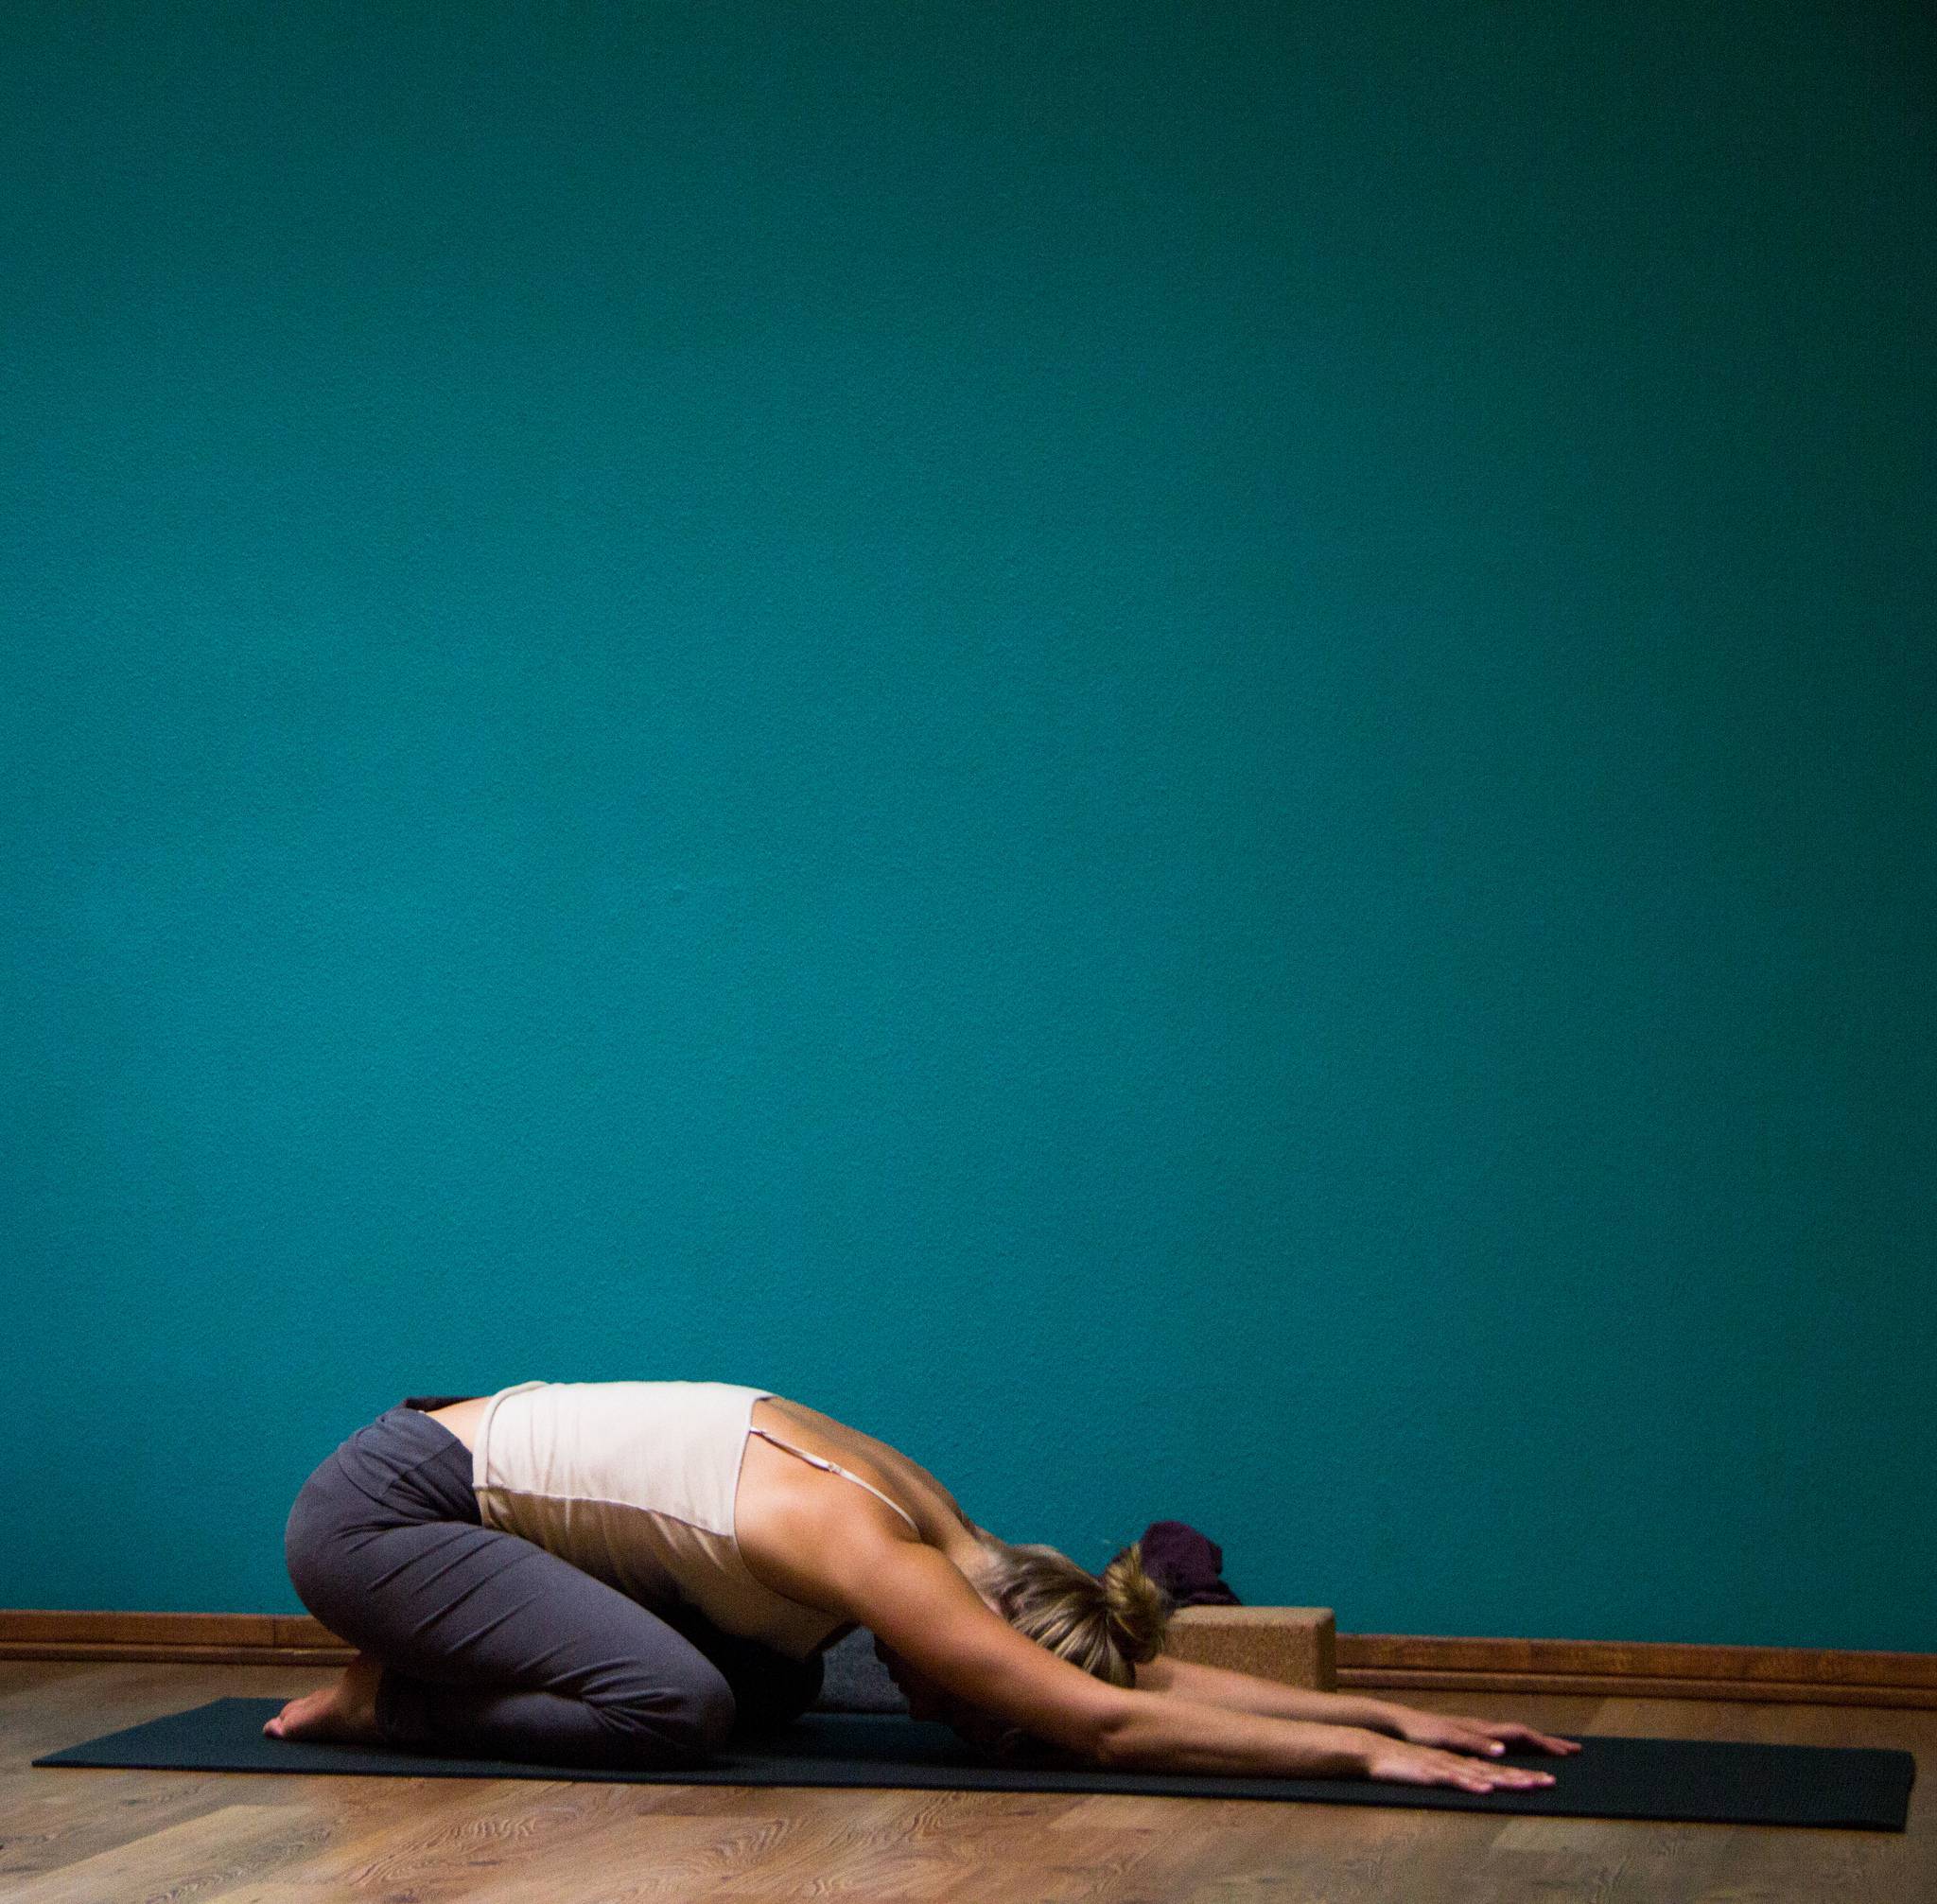 Йога против бессонницы: 10 эффективных асан перед сном